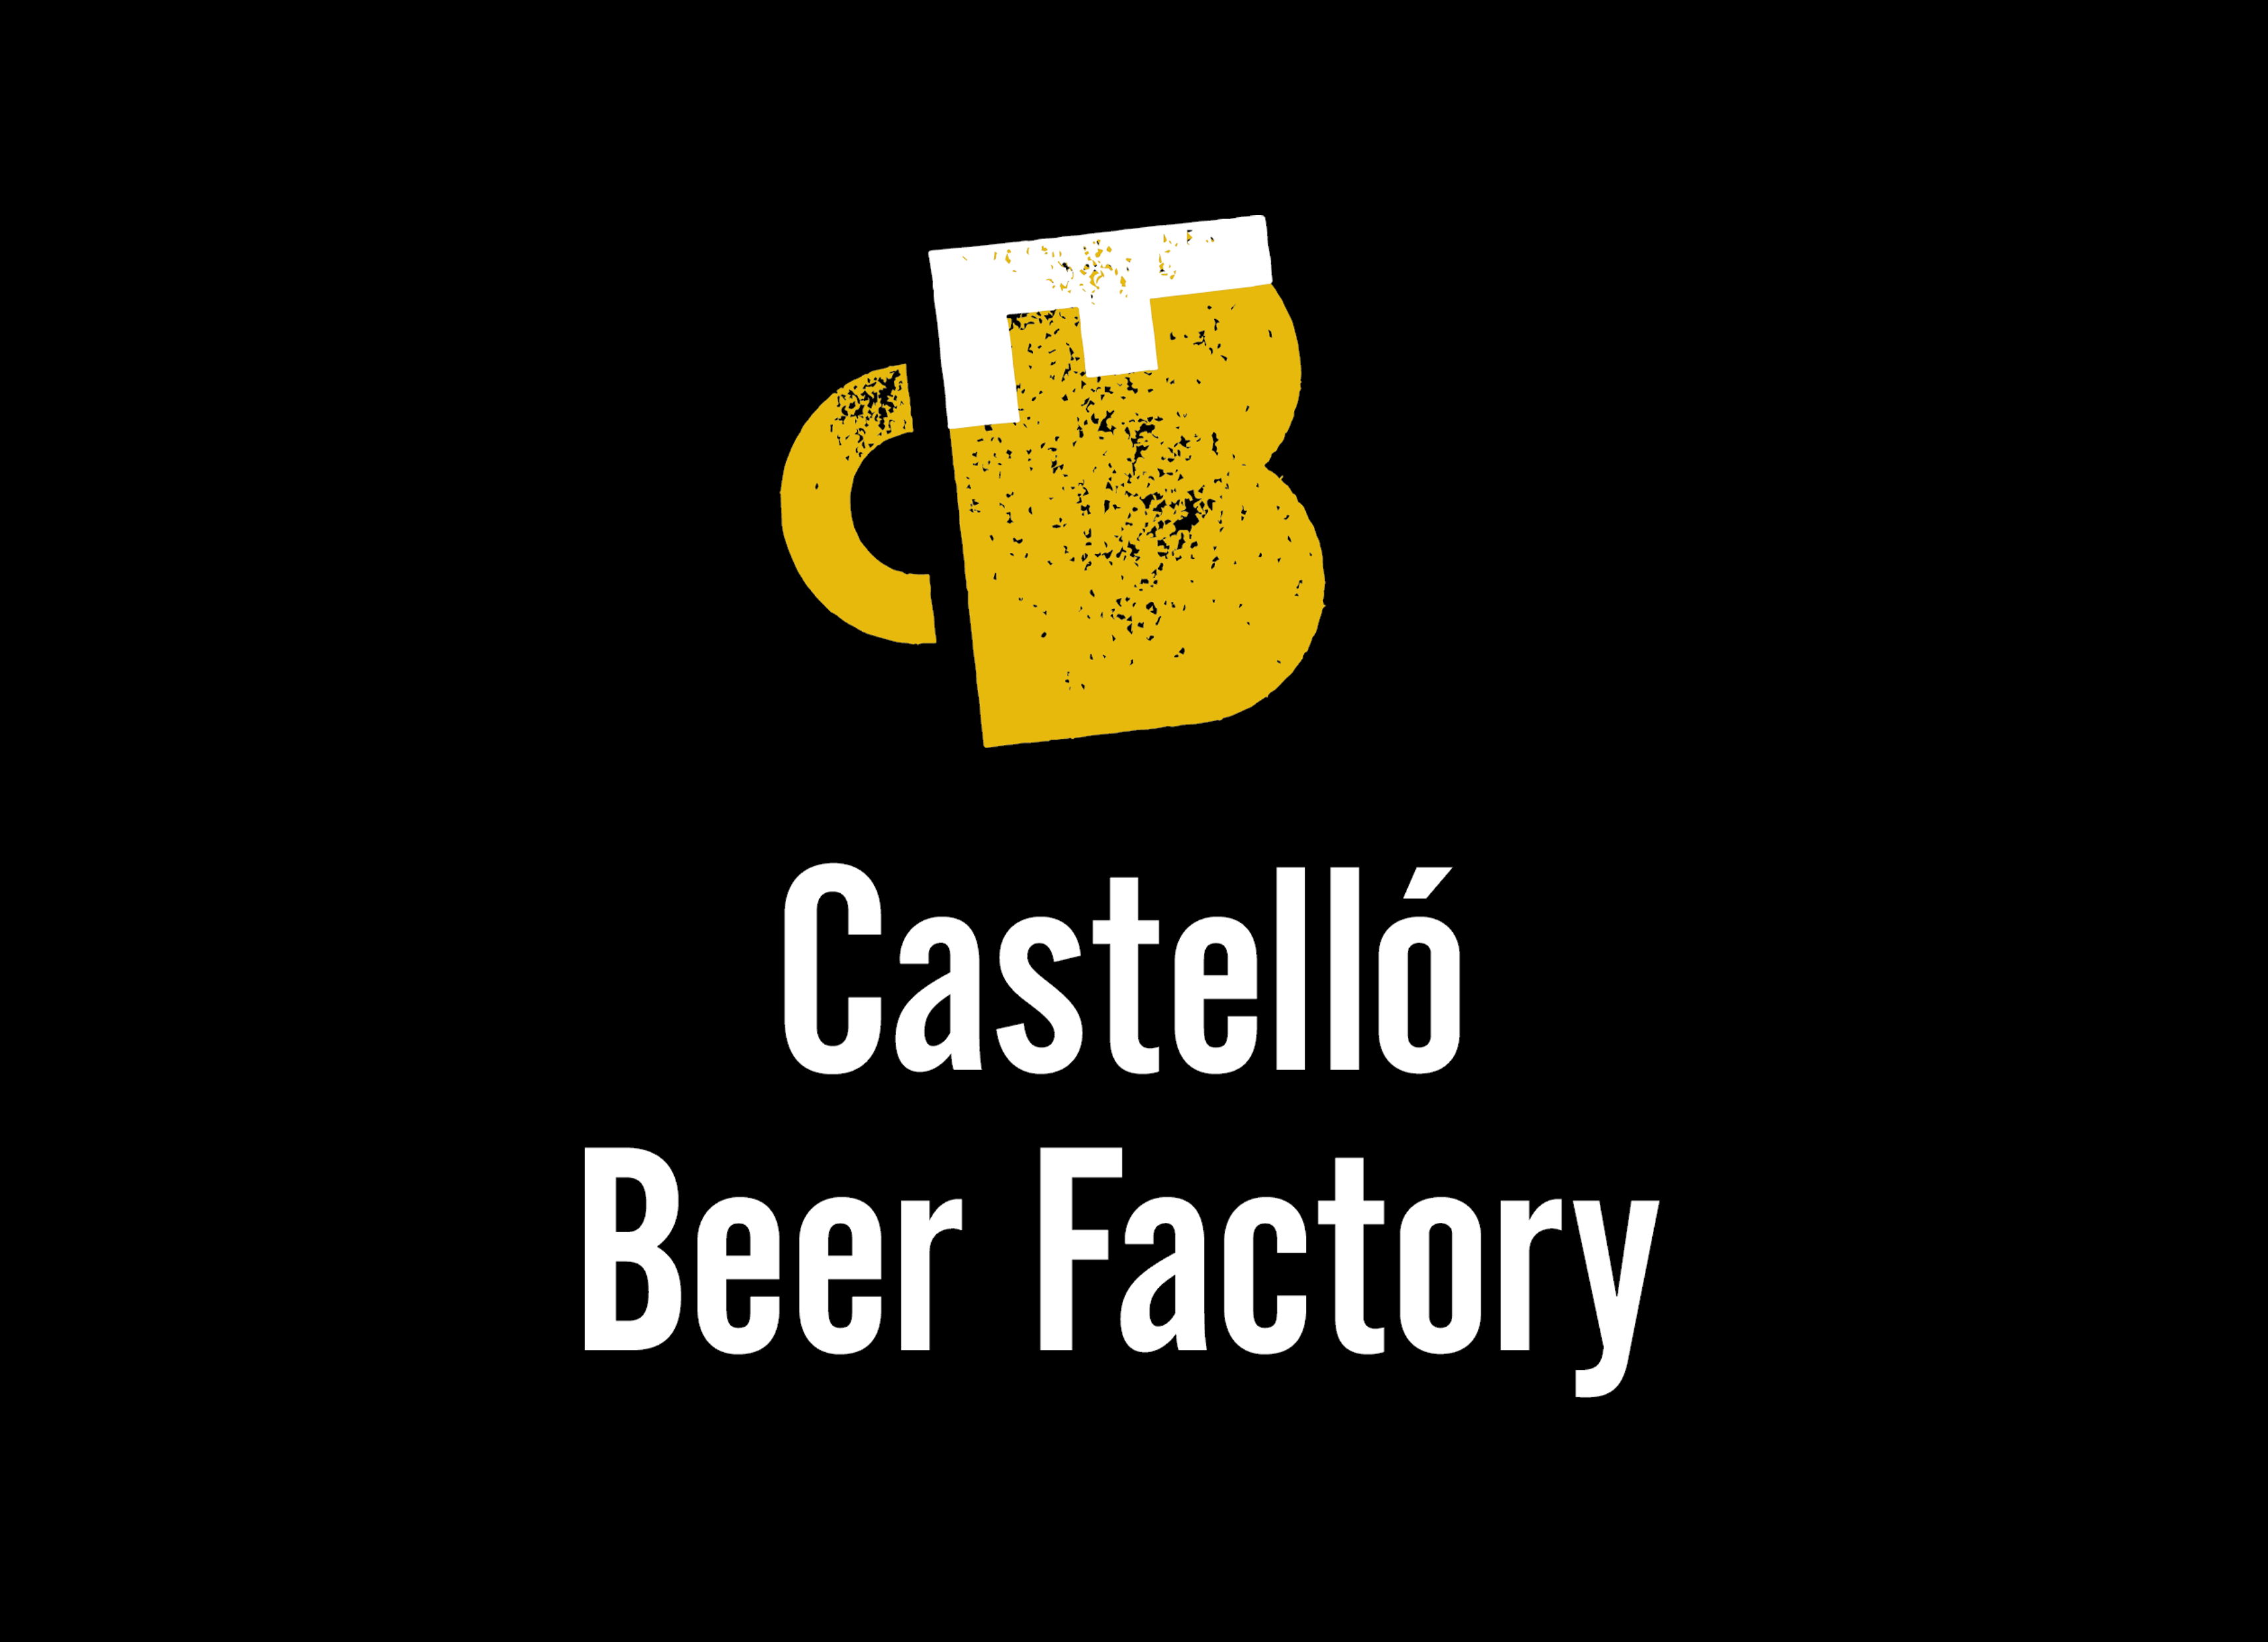 CASTELLÓ BEER FACTORY